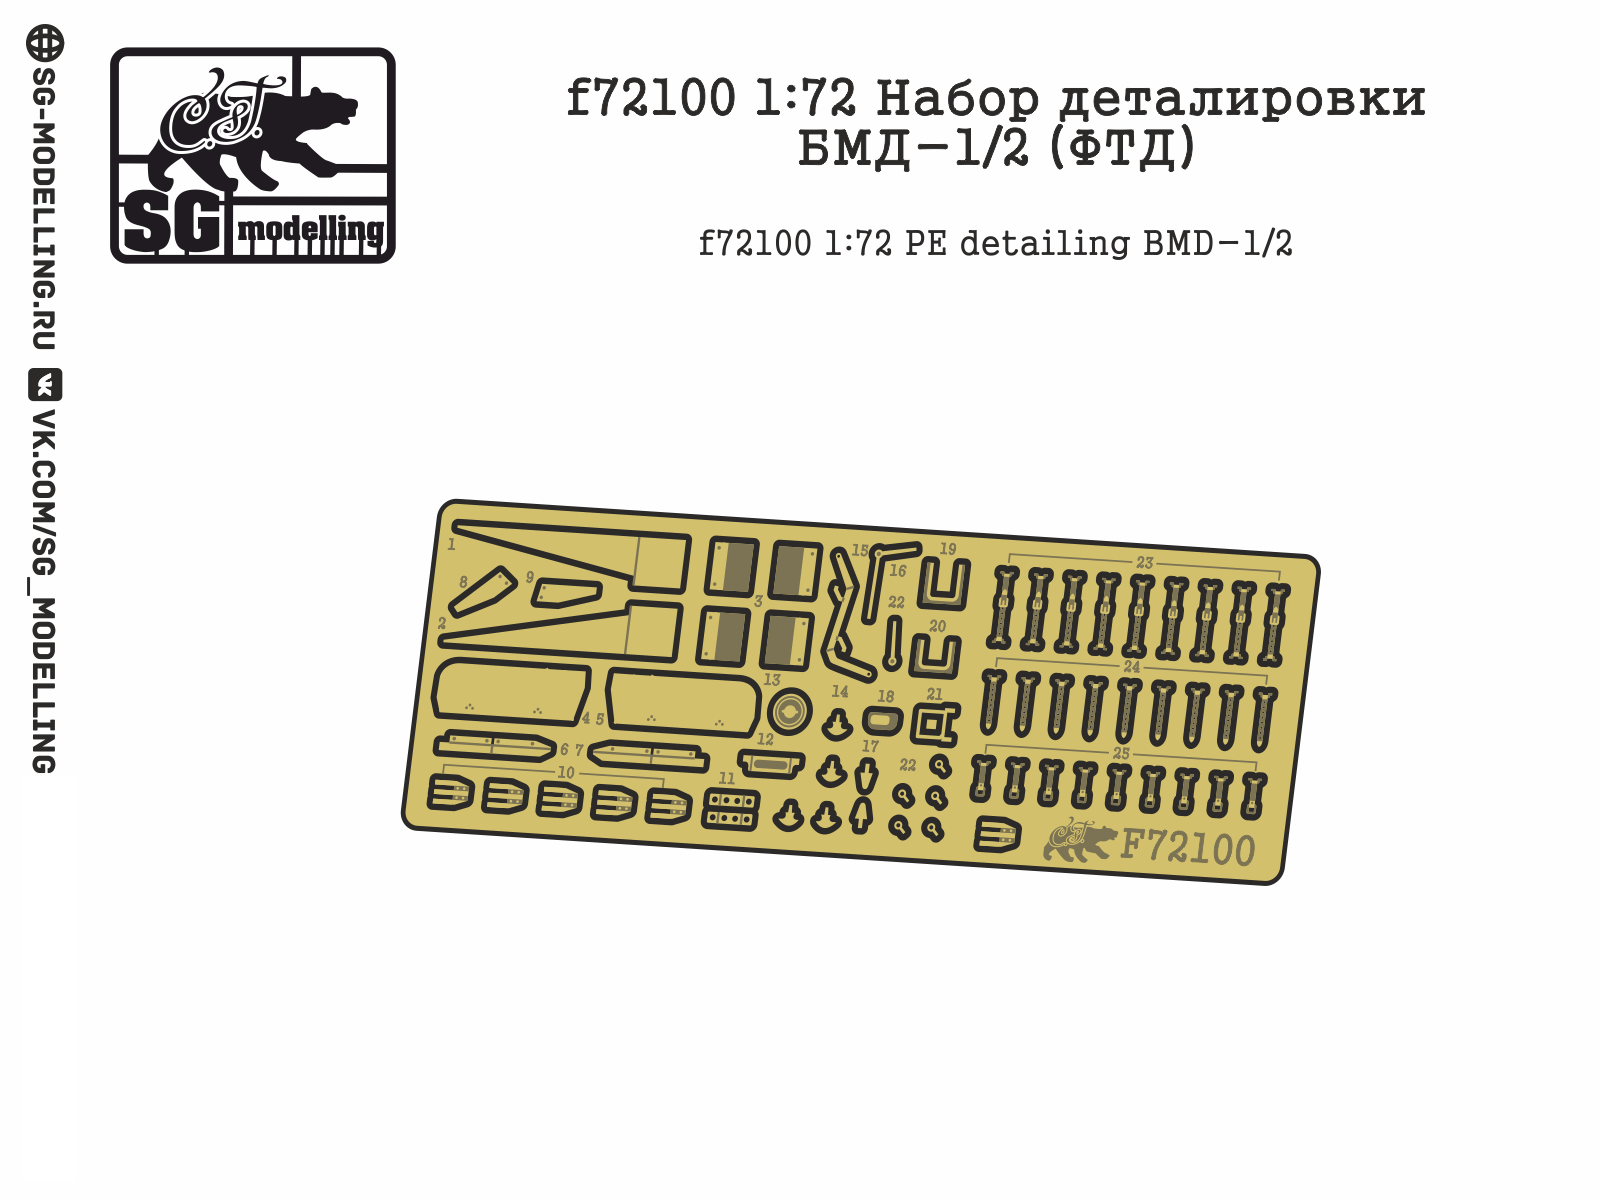 F72100 1:72 Detachment of BMD-1/2 (FTD) details - imodeller.store